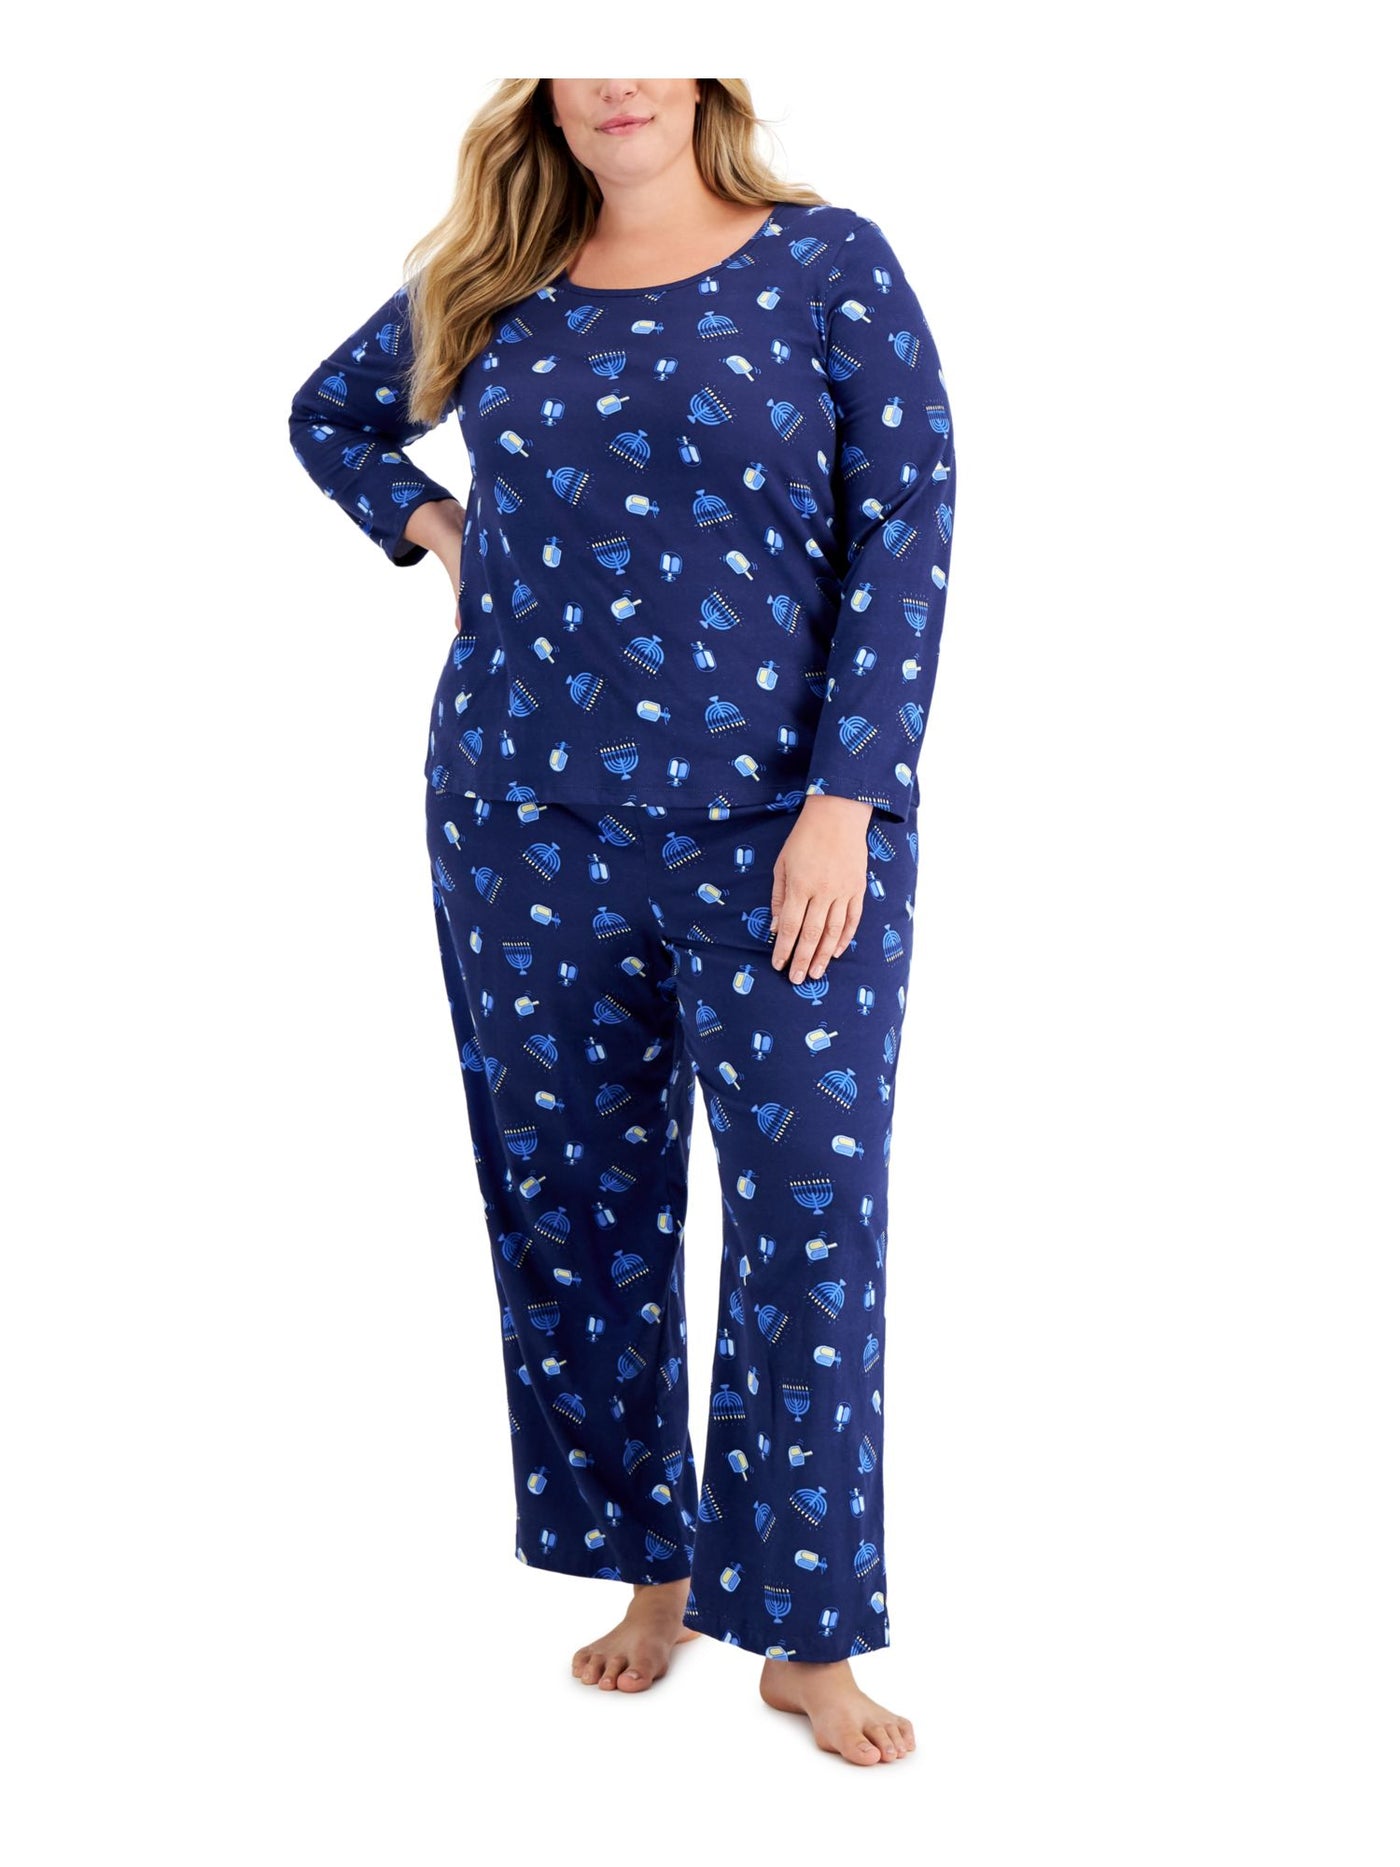 FAMILY PJs Womens Navy Printed Top Elastic Band Long Sleeve Straight leg Pants Knit Pajamas Plus 2X